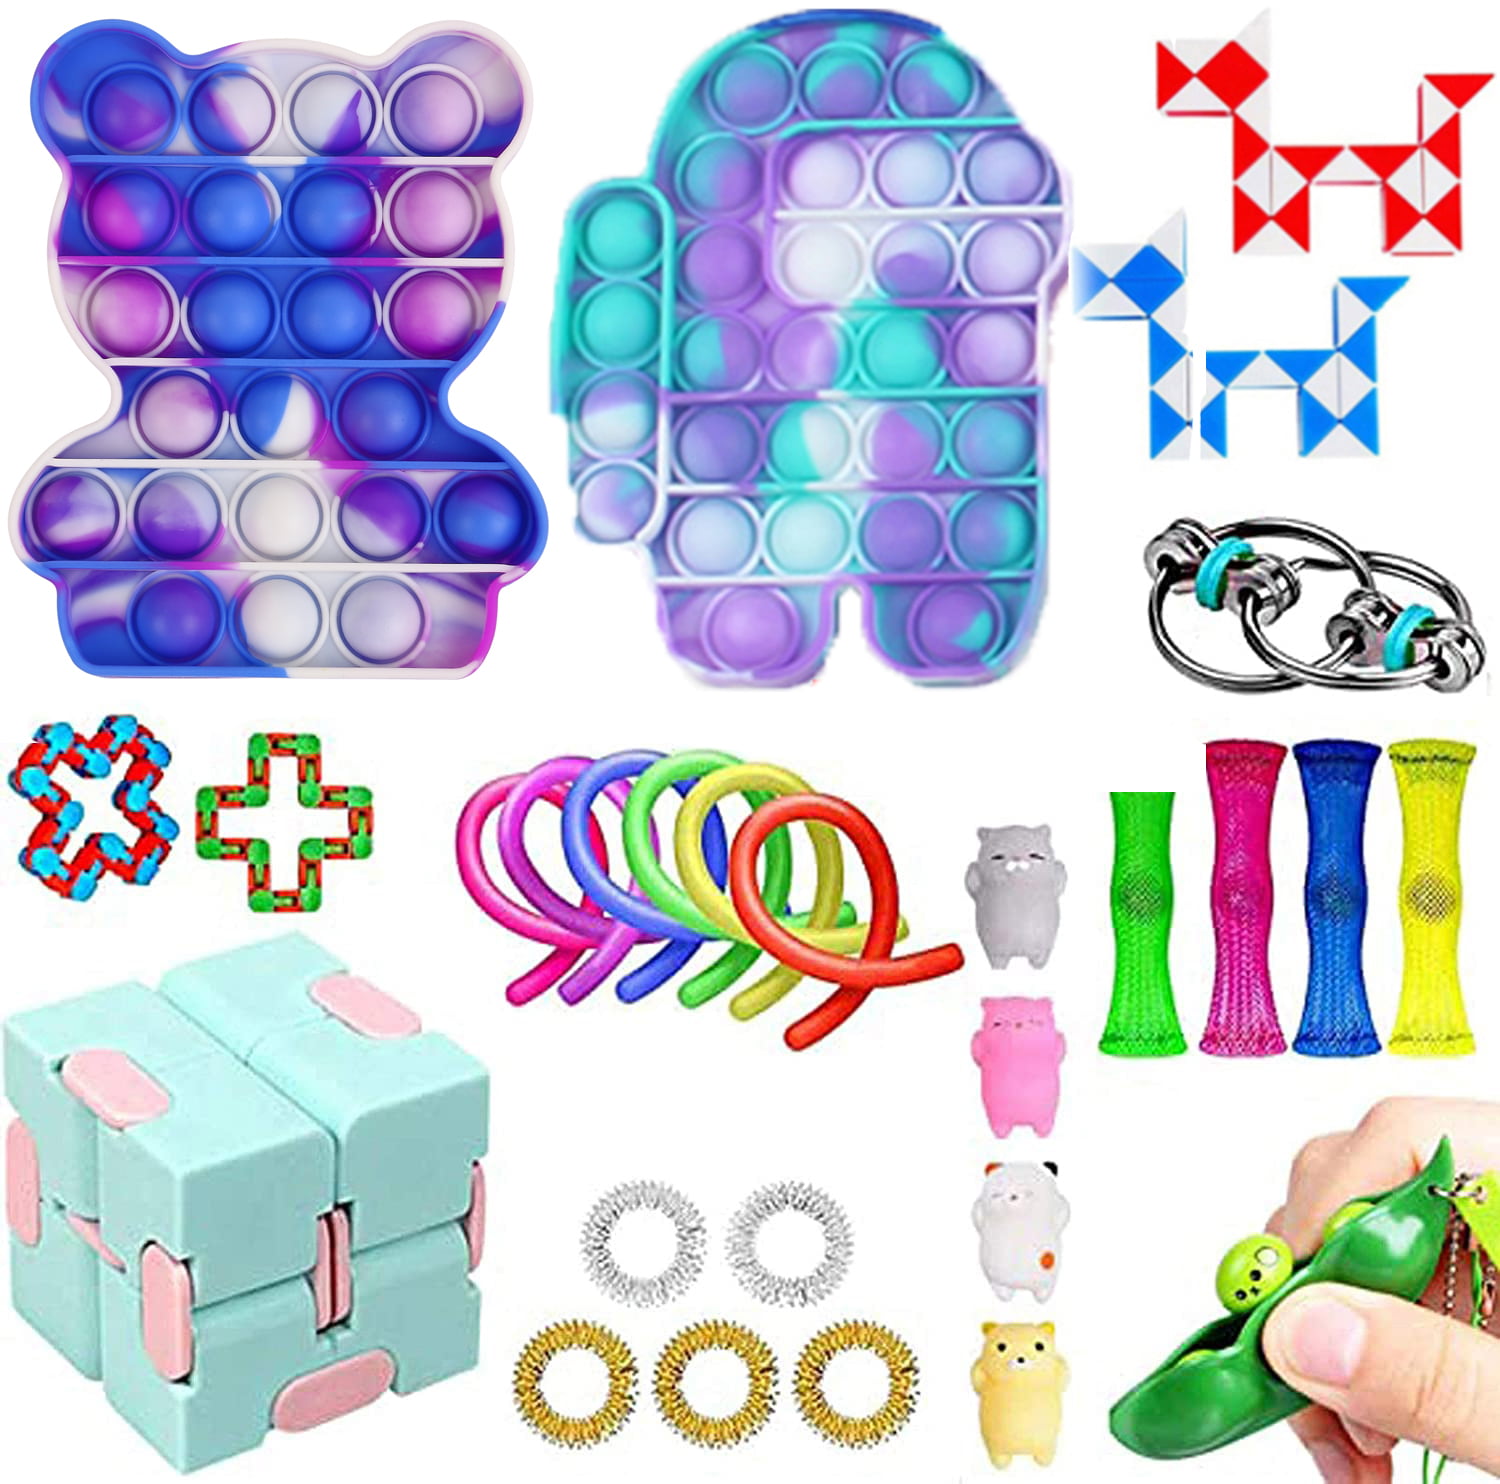 Details about   Fun Sensory Toys Fidget Stress Sensory Autism ADHD Kids Gifts Educational Toy 